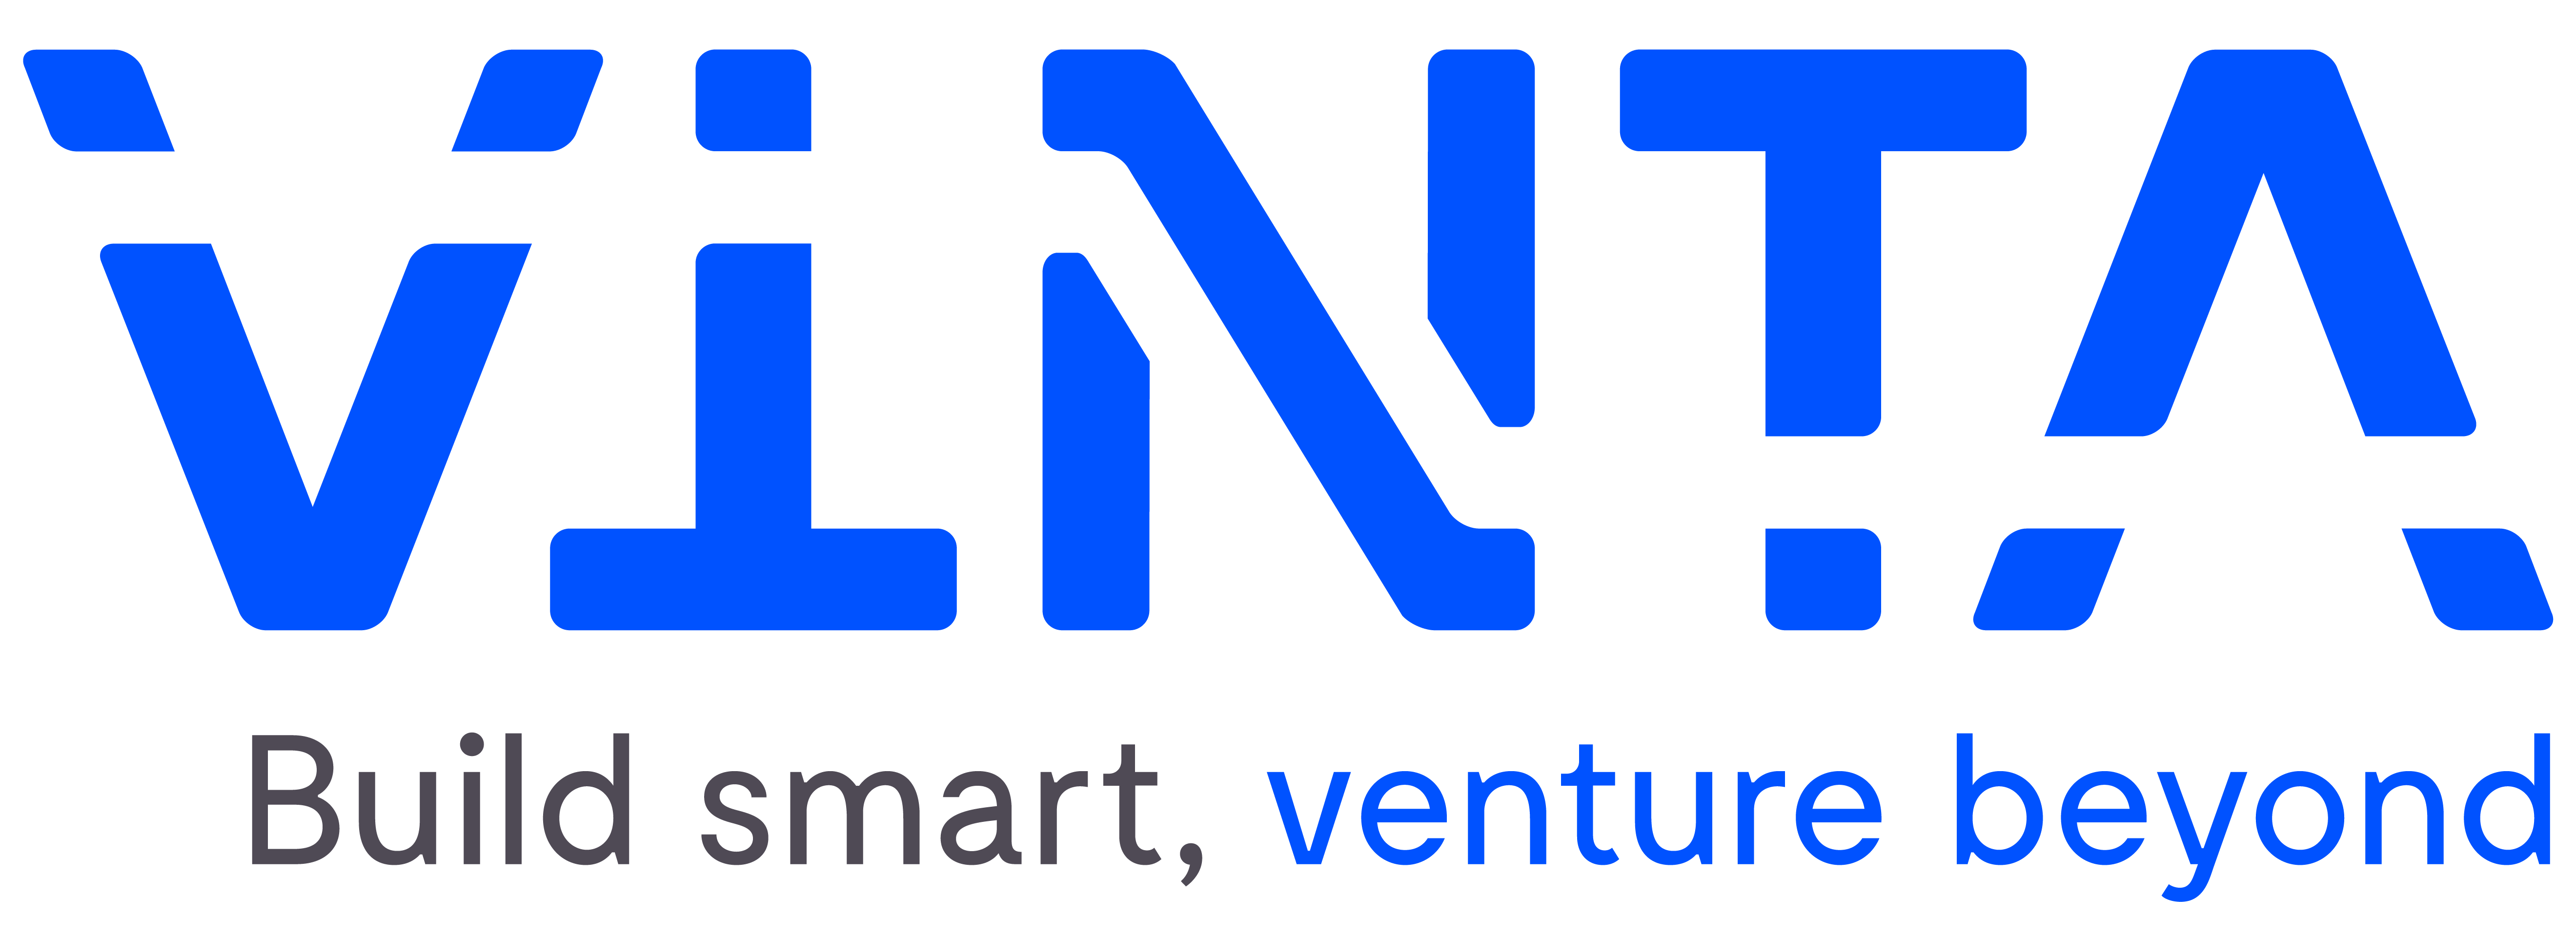 Vinta Logo